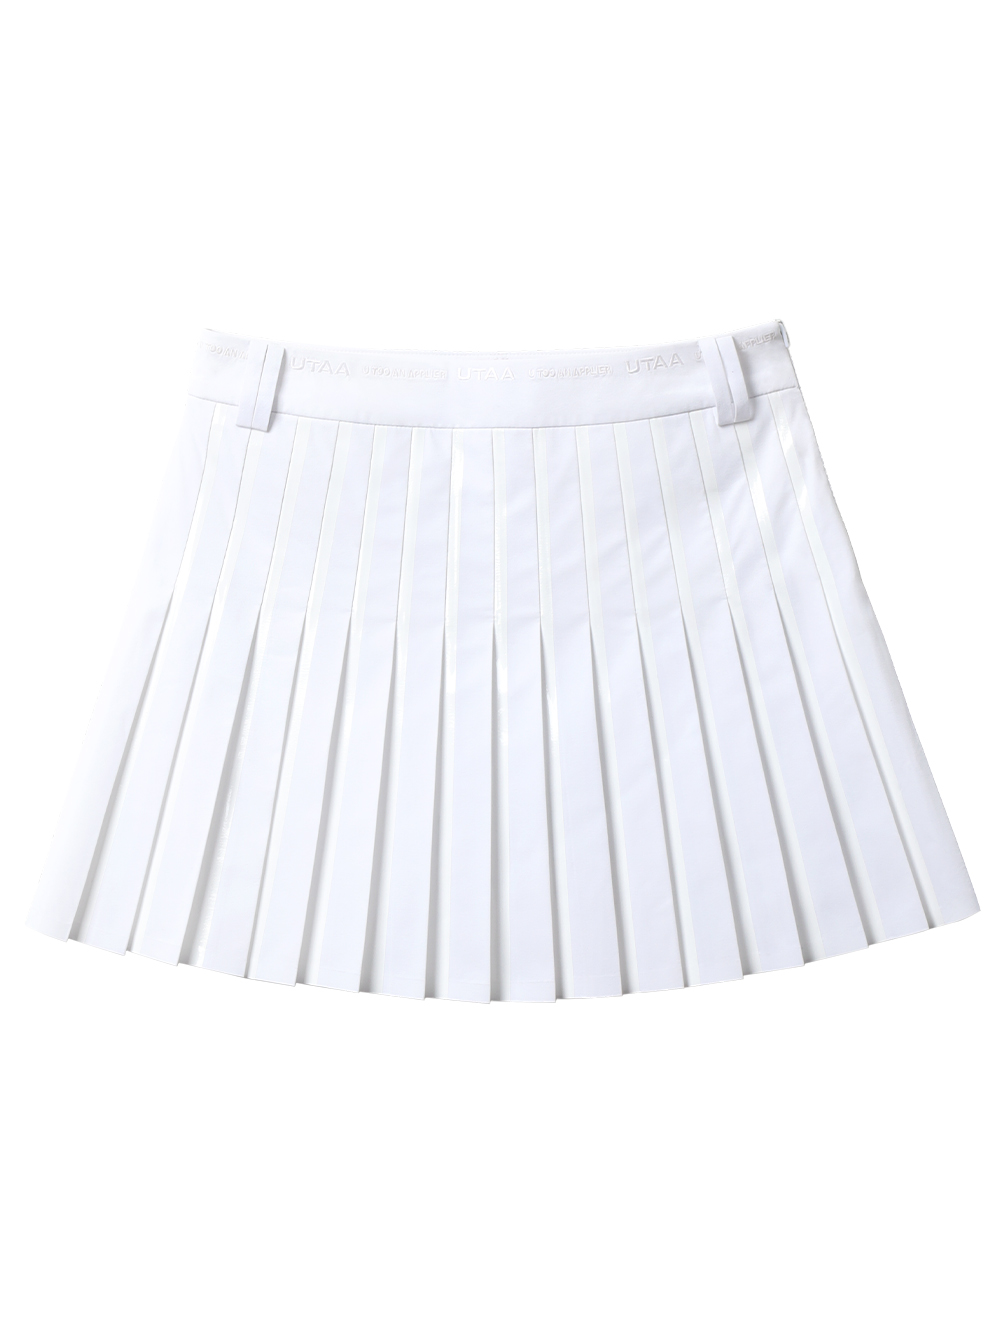 UTAA Blind Fan Skirt (UA2SKF501WH)